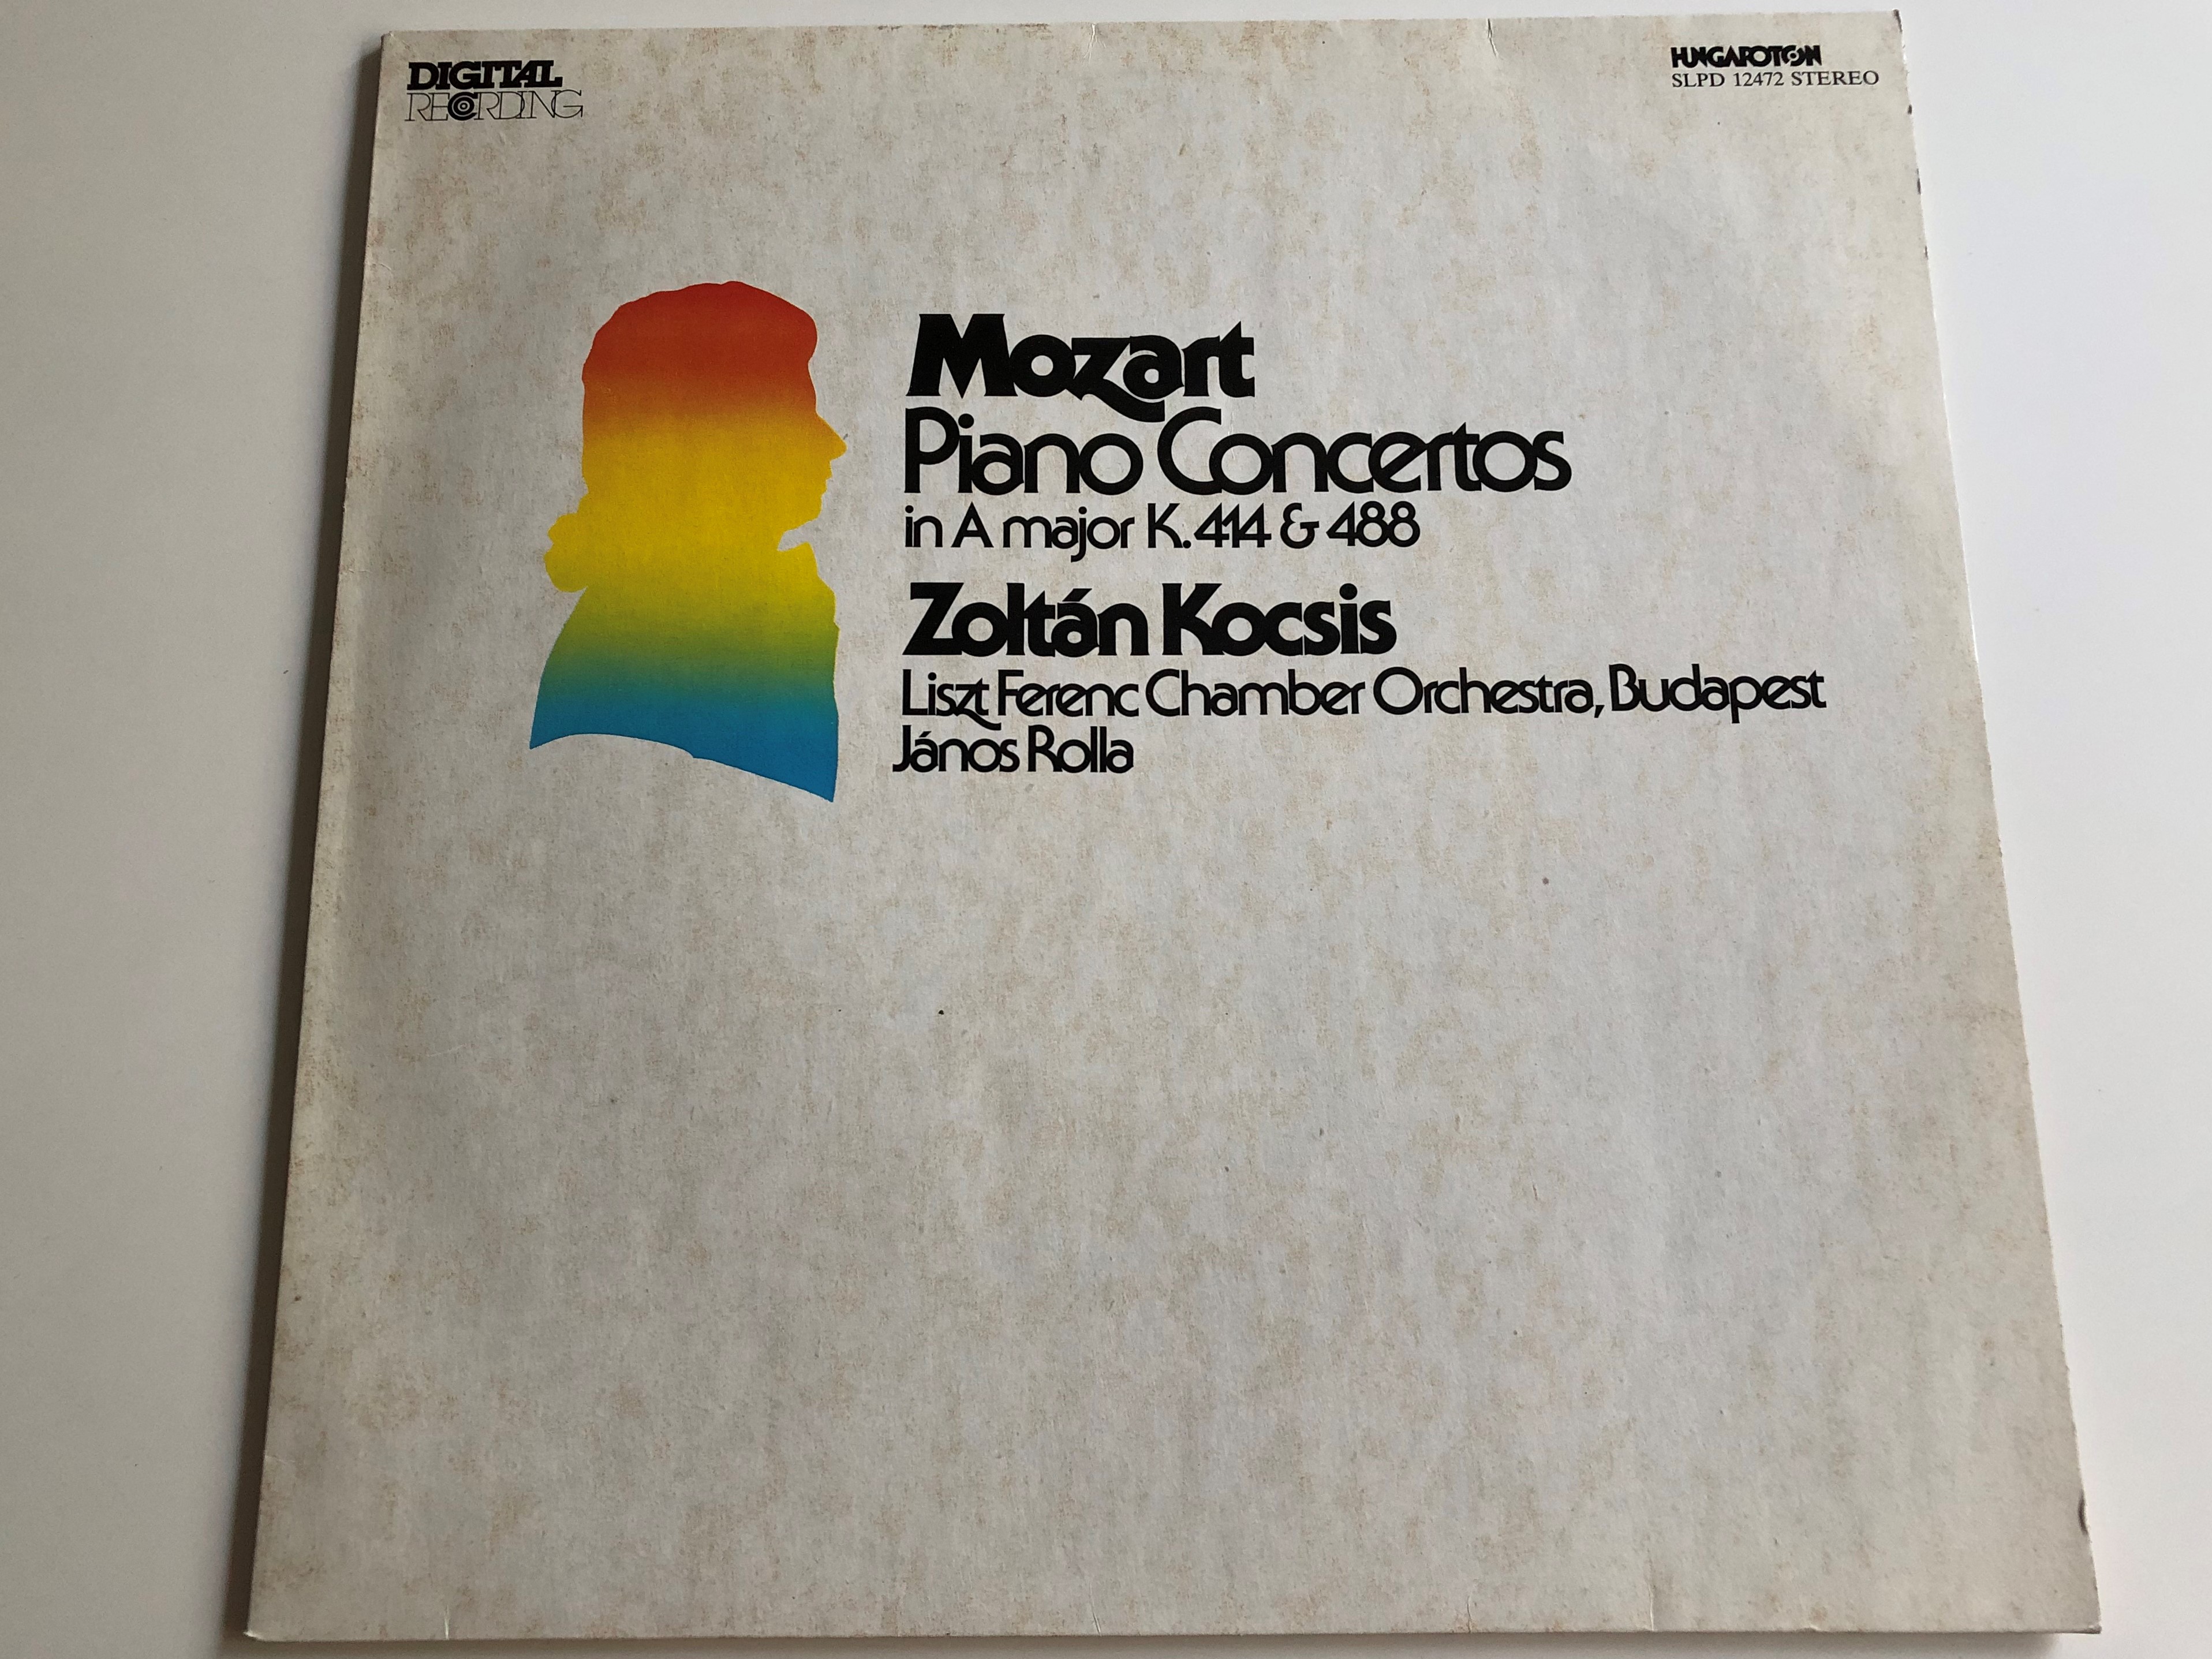 mozart-piano-concertos-in-a-major-k.414-488-zoltan-kocsis-liszt-ferenc-chamber-orchestra-budapest-janos-rolla-hungaroton-lp-stereo-slpd-12472-1-.jpg